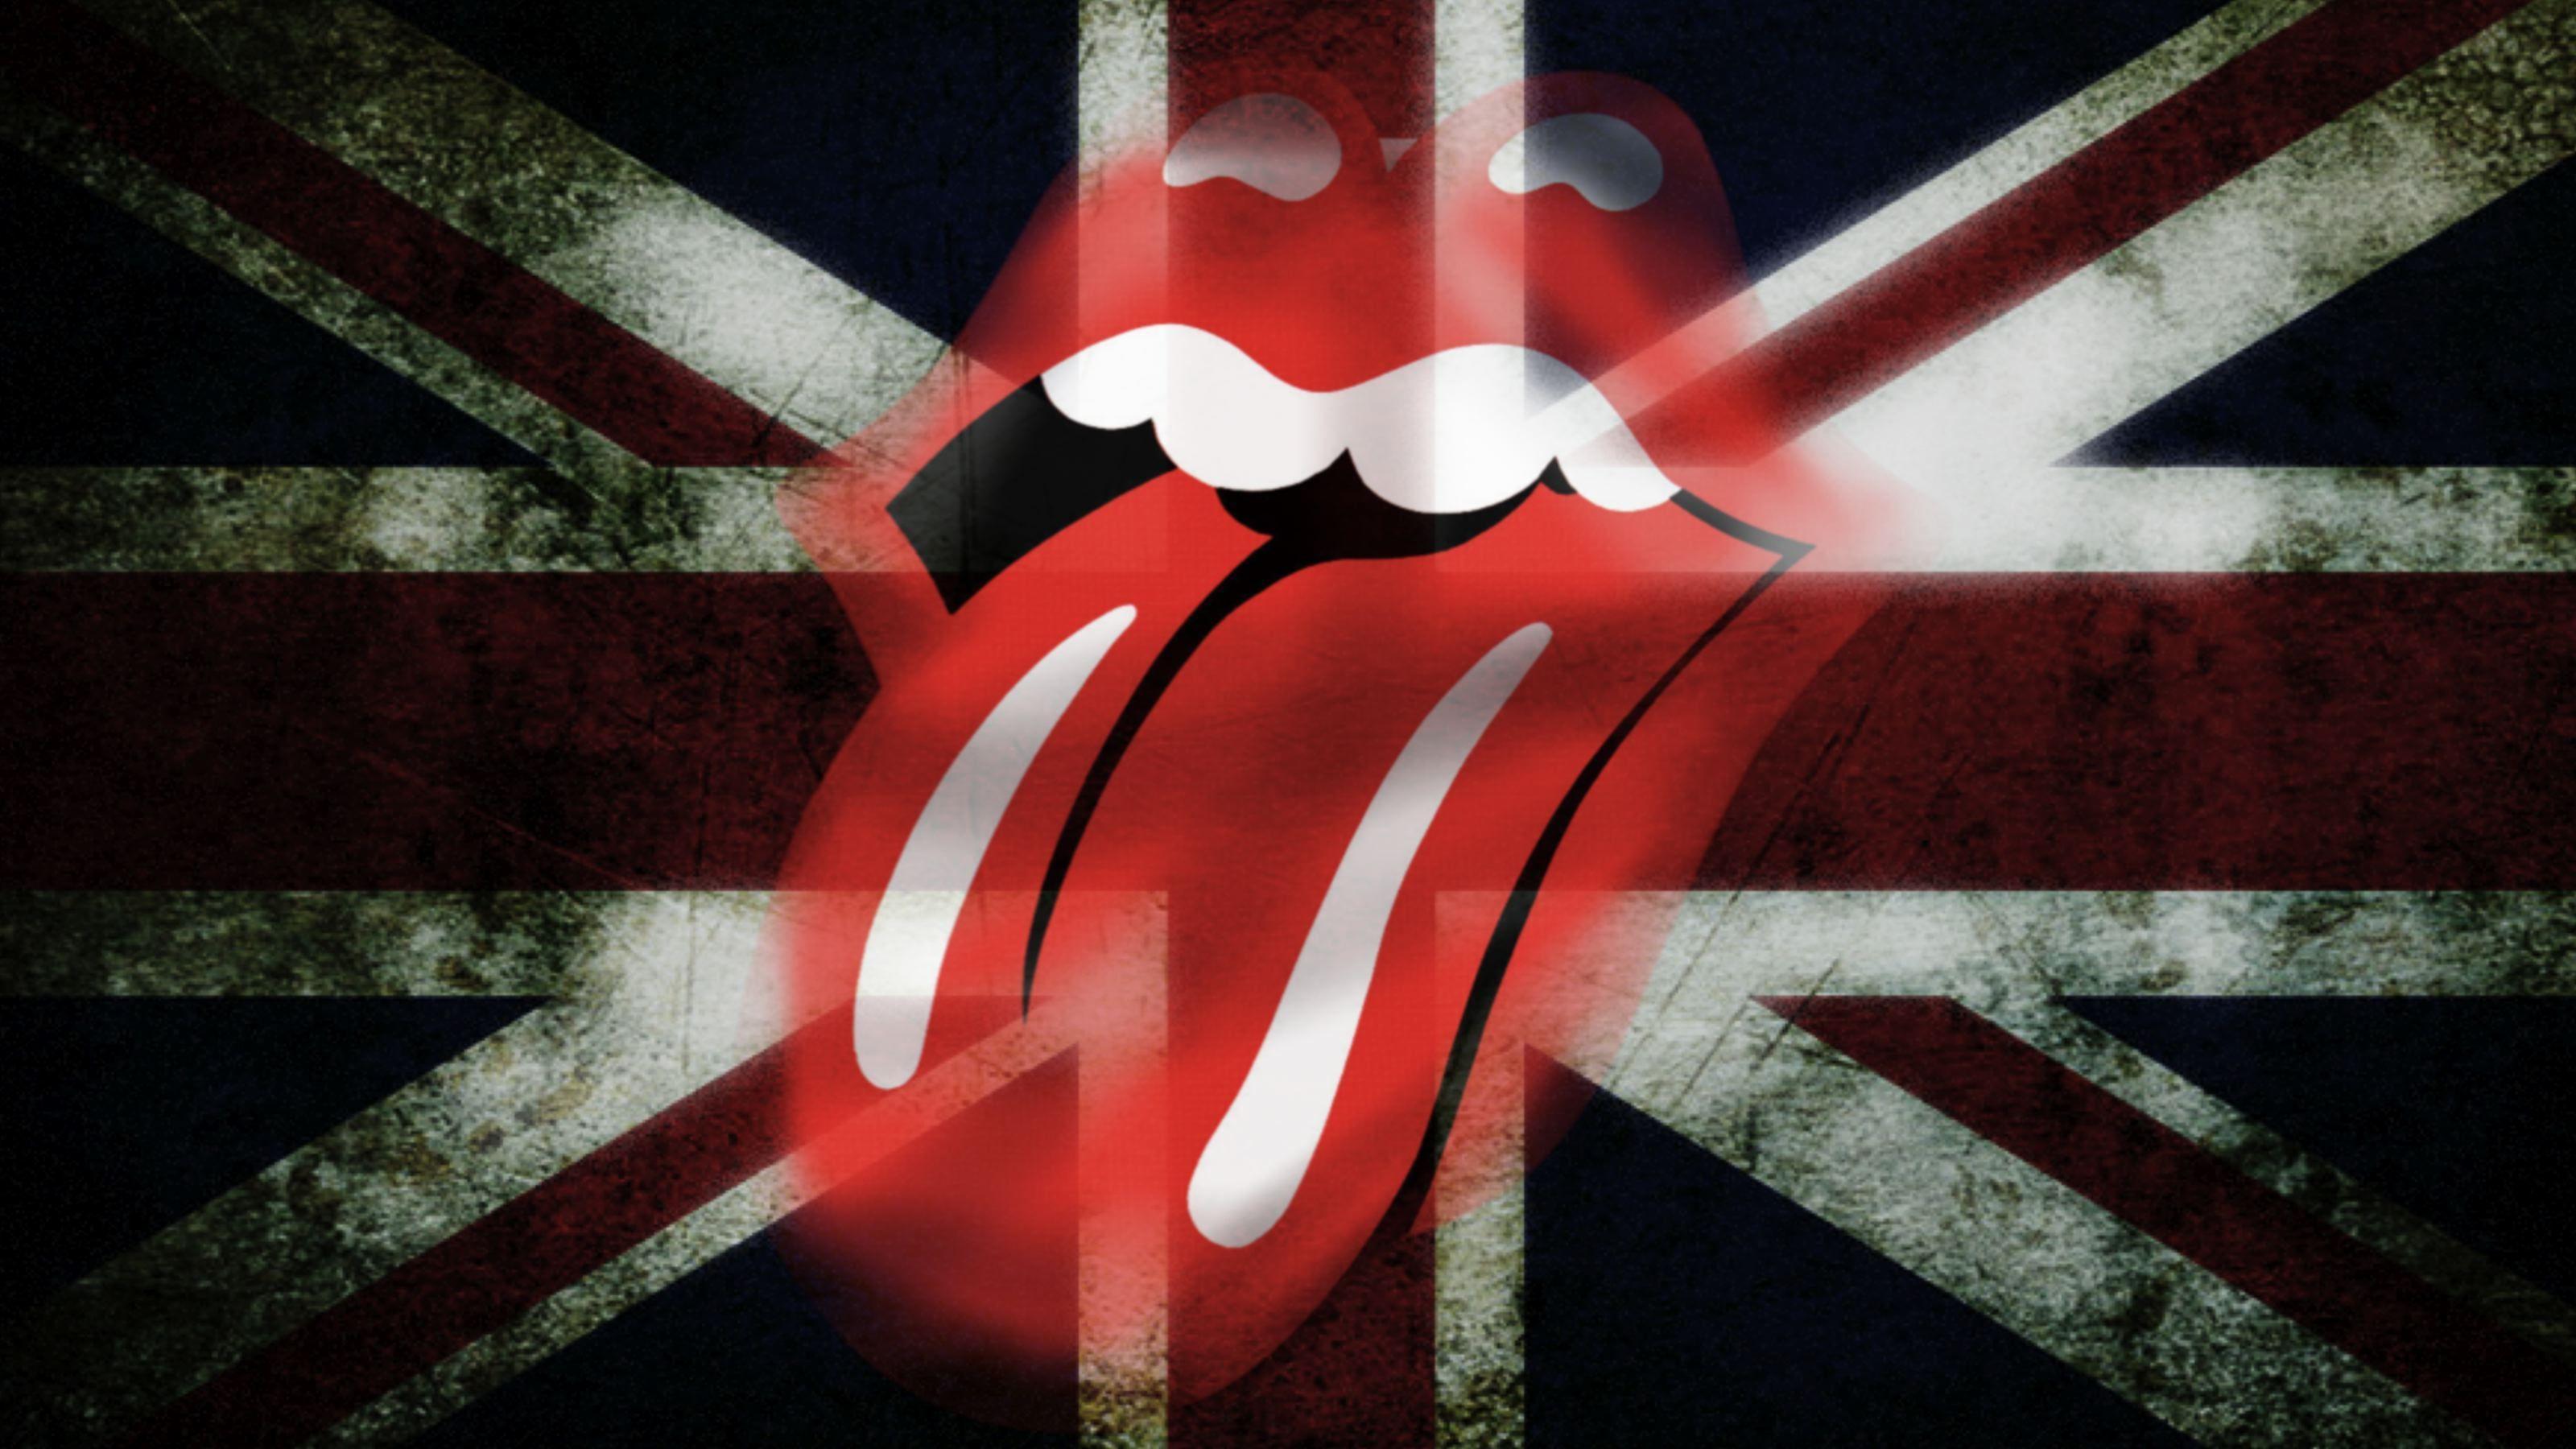 The Rolling Stones HD Wallpaper for desktop download